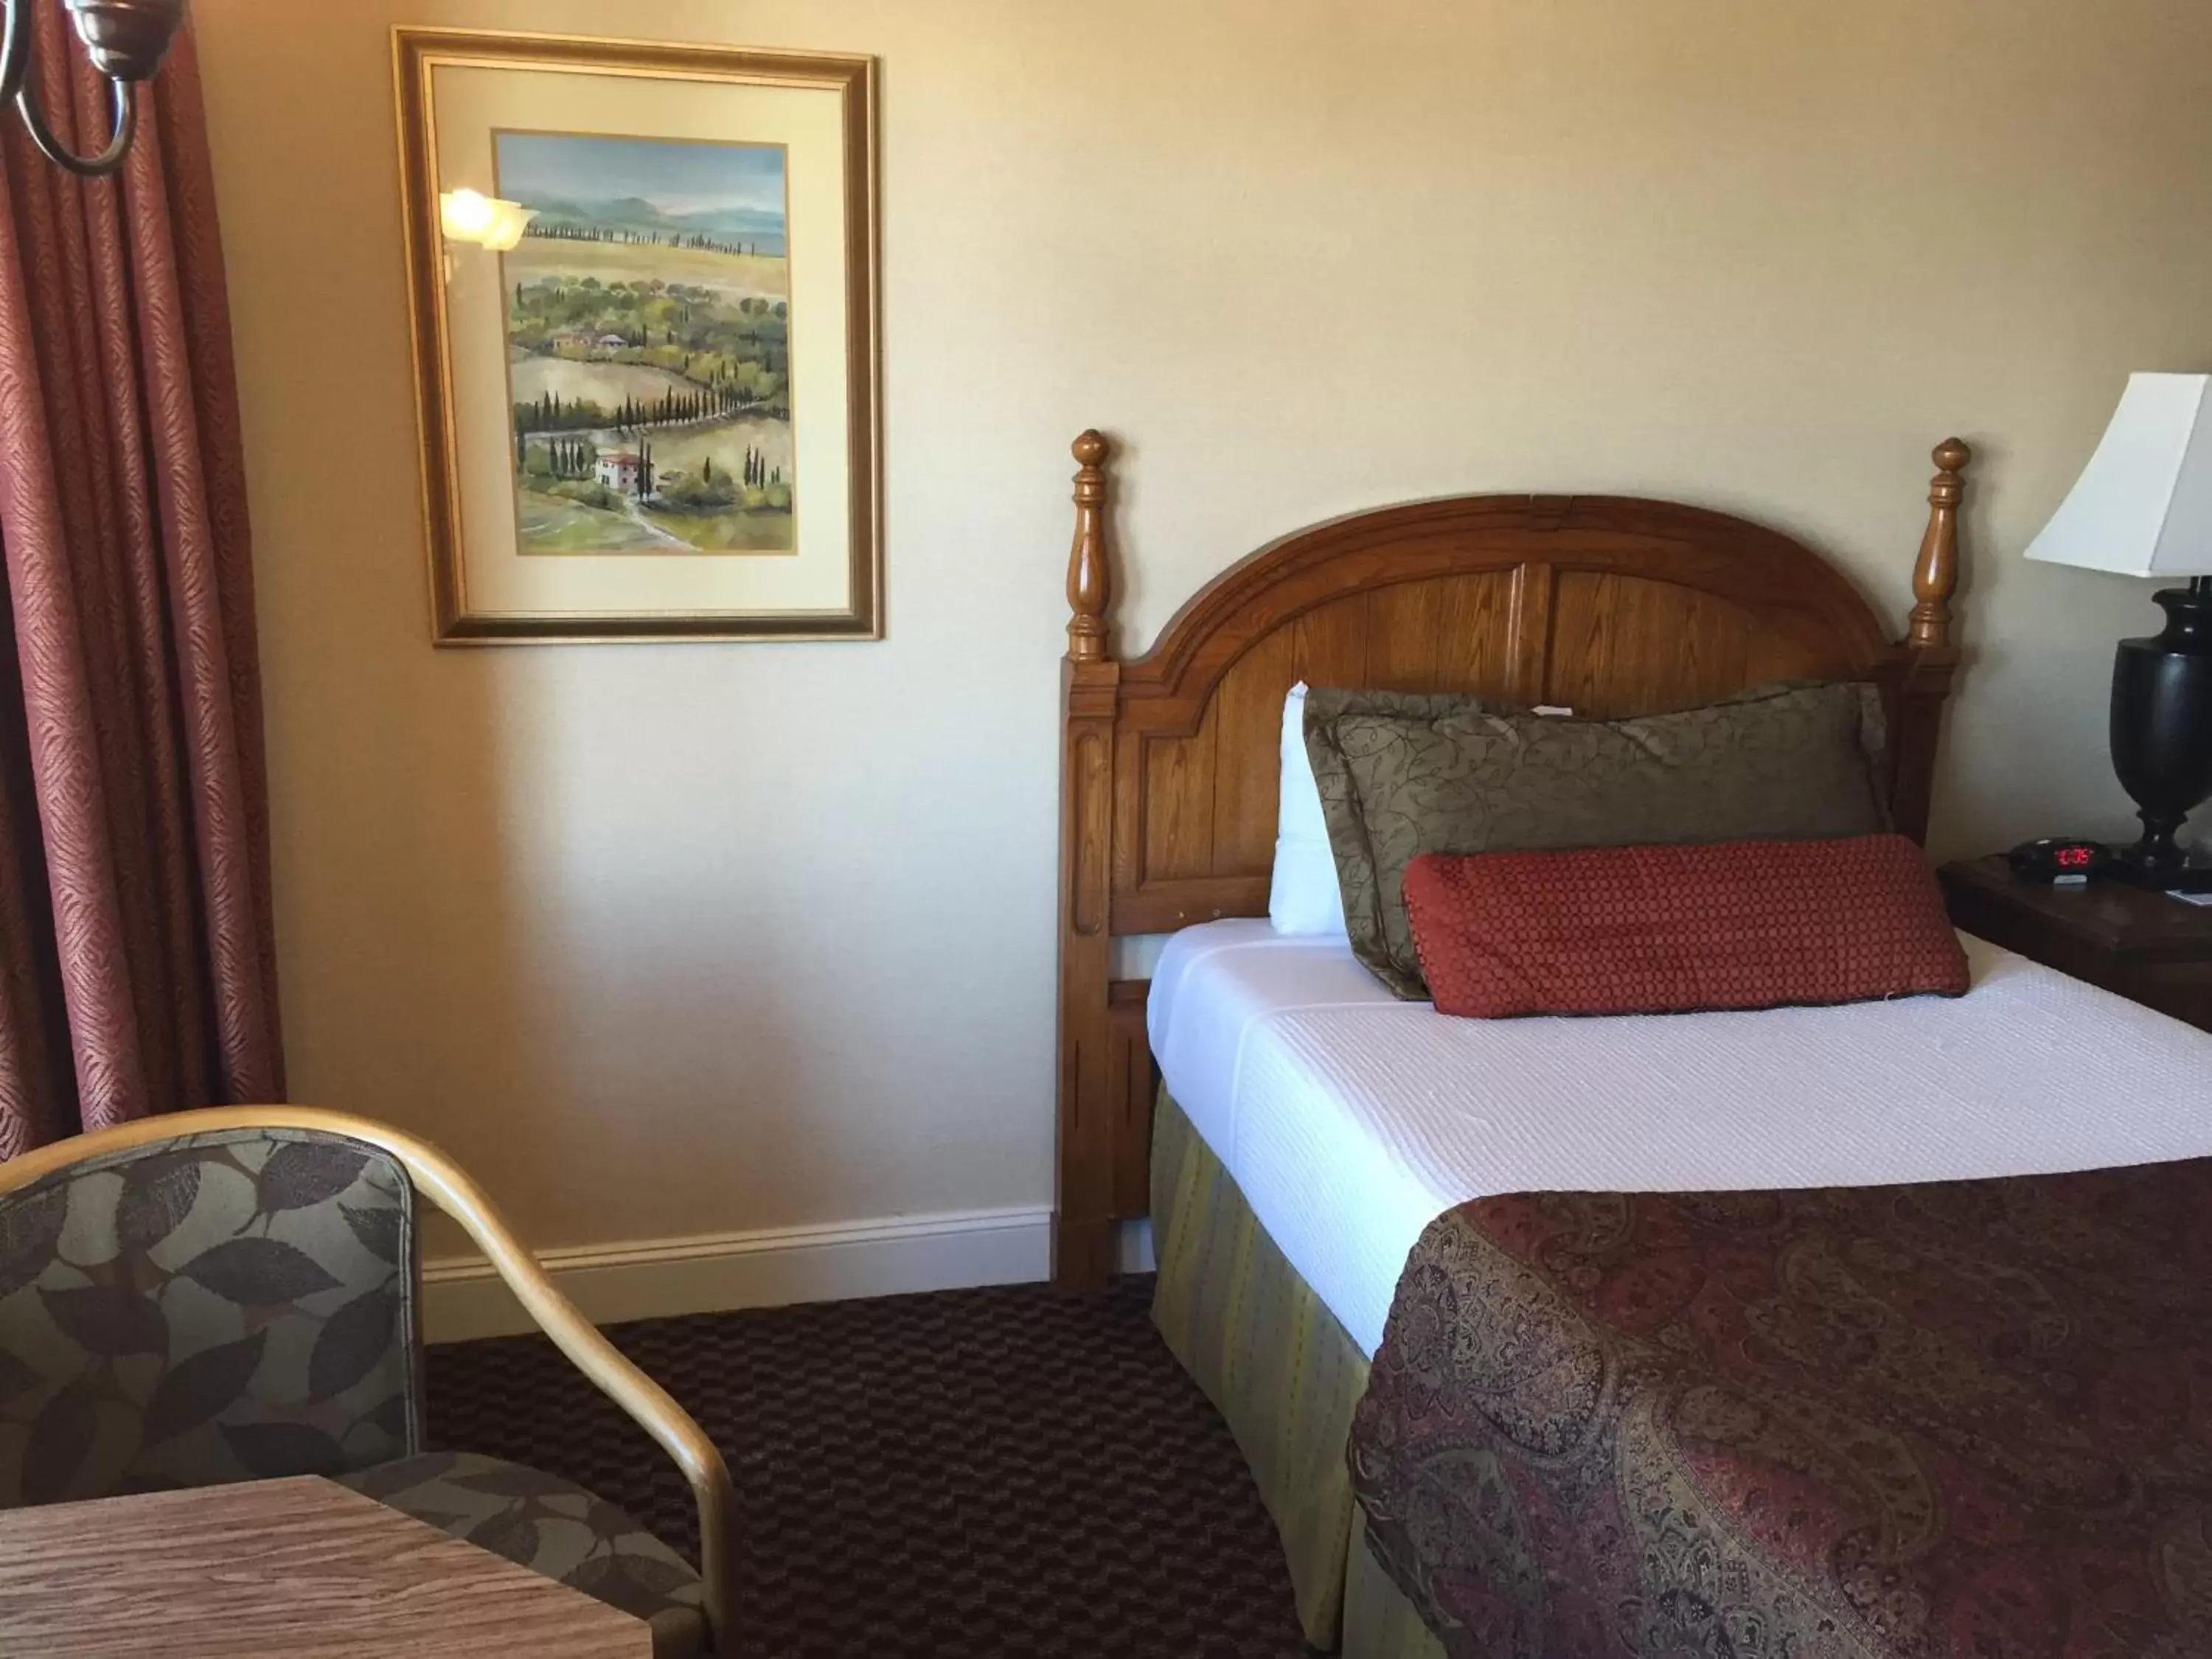 Bed, Room Photo in Coventry Motor Inn